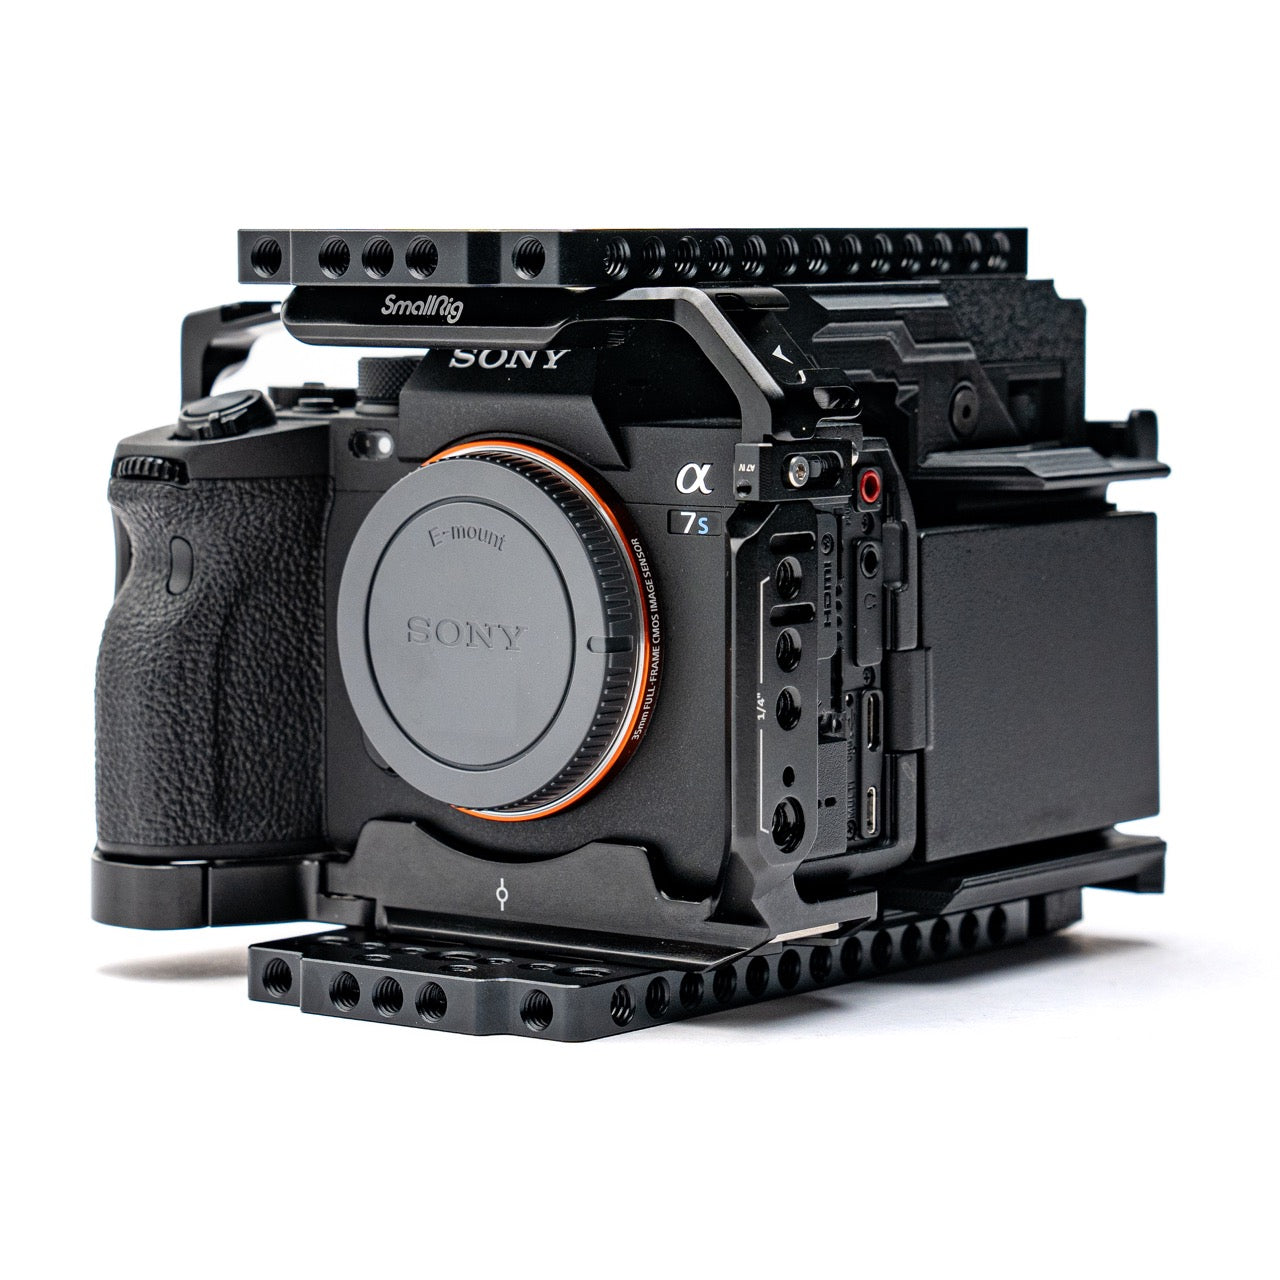 CineBack for A7 Series Cameras (Pre-Order)